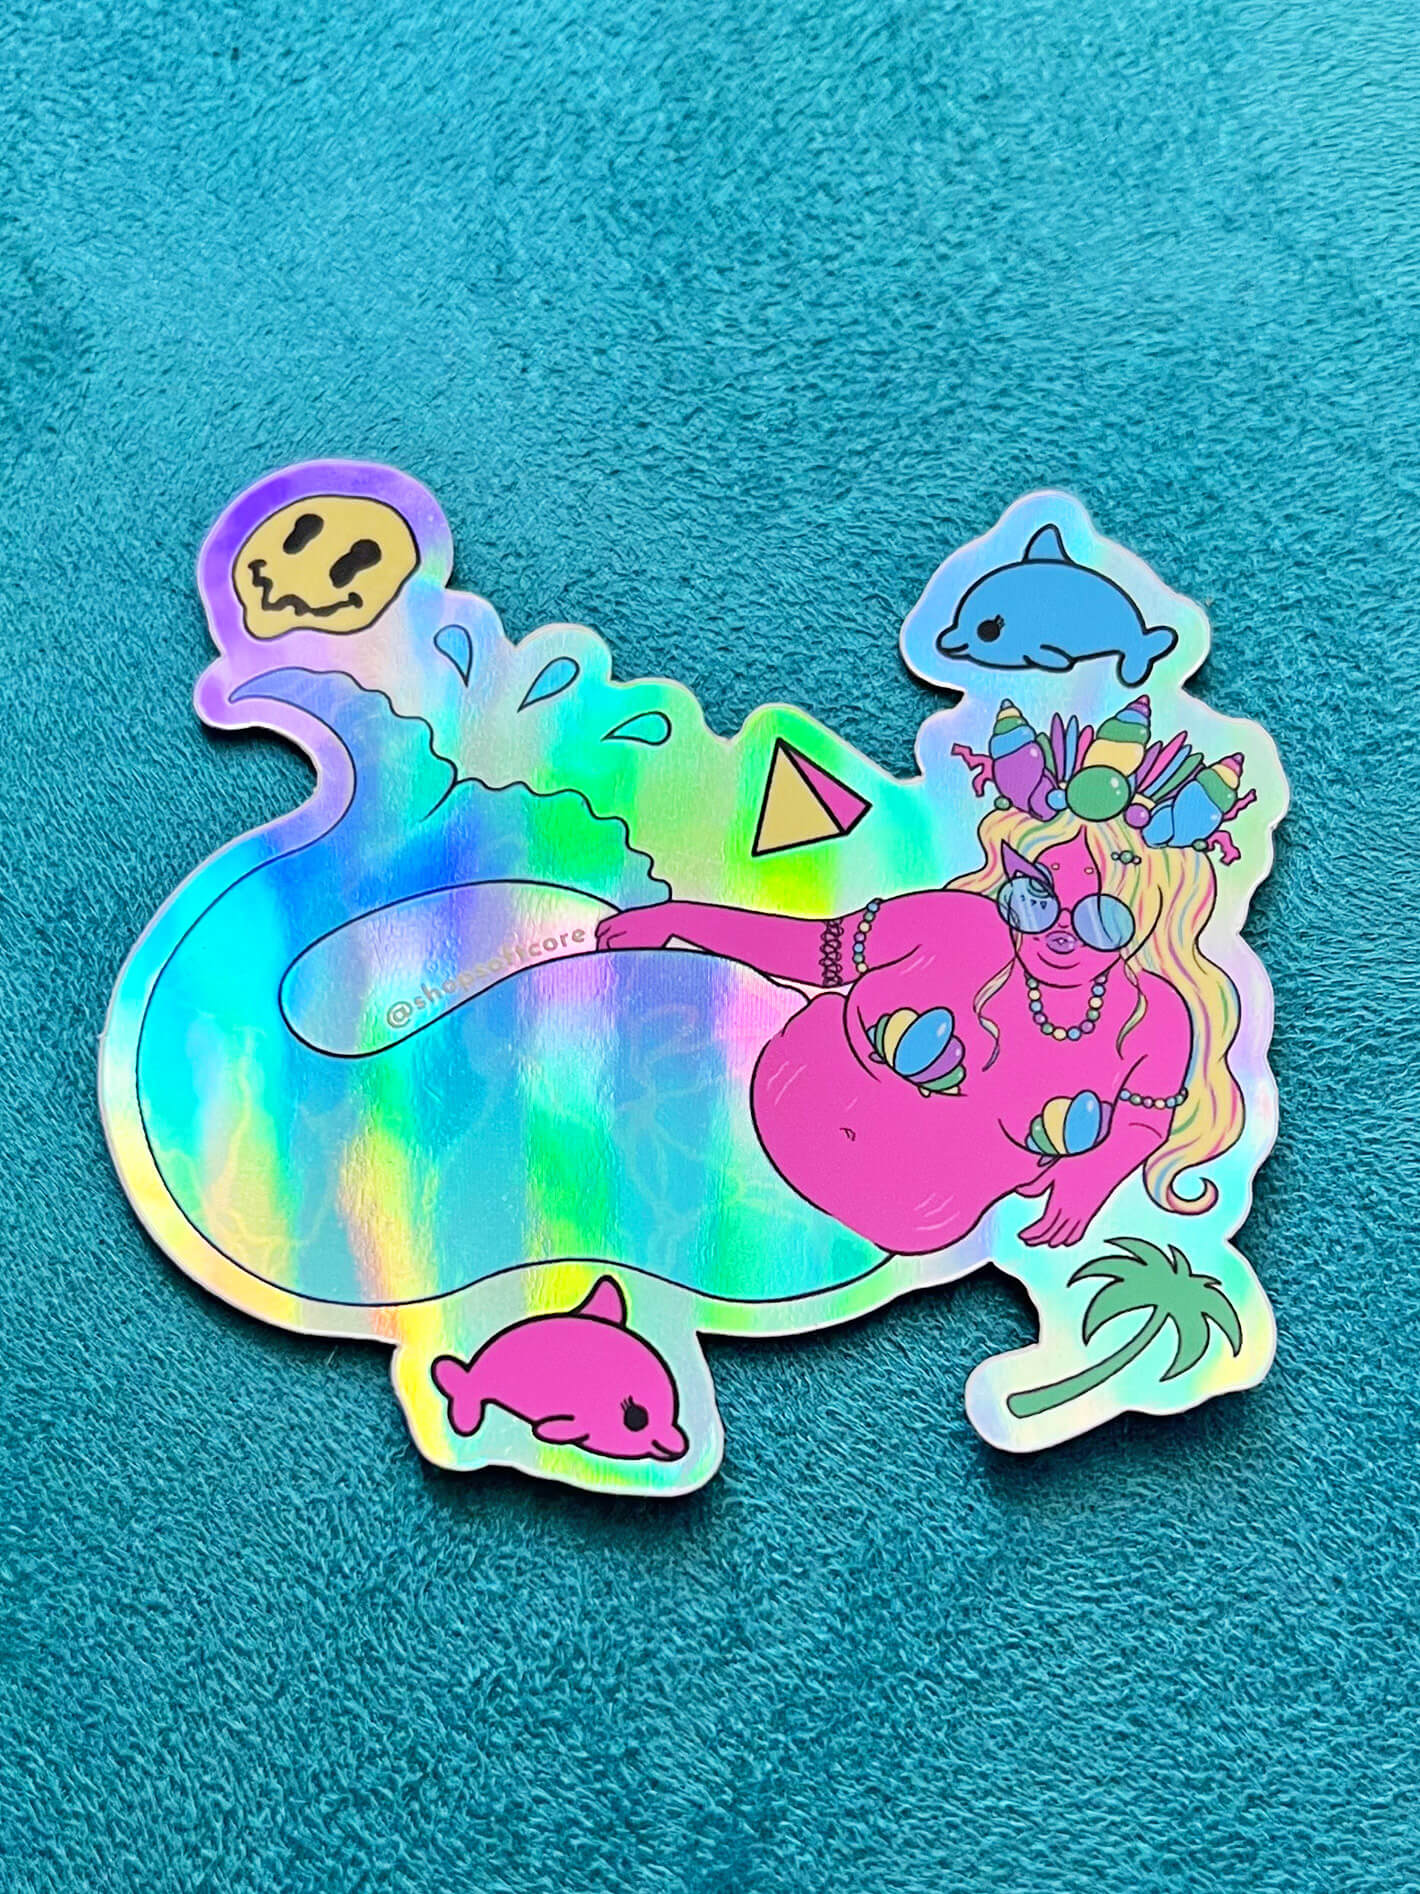 Seapunk mermaid vaporwave bopo sticker.